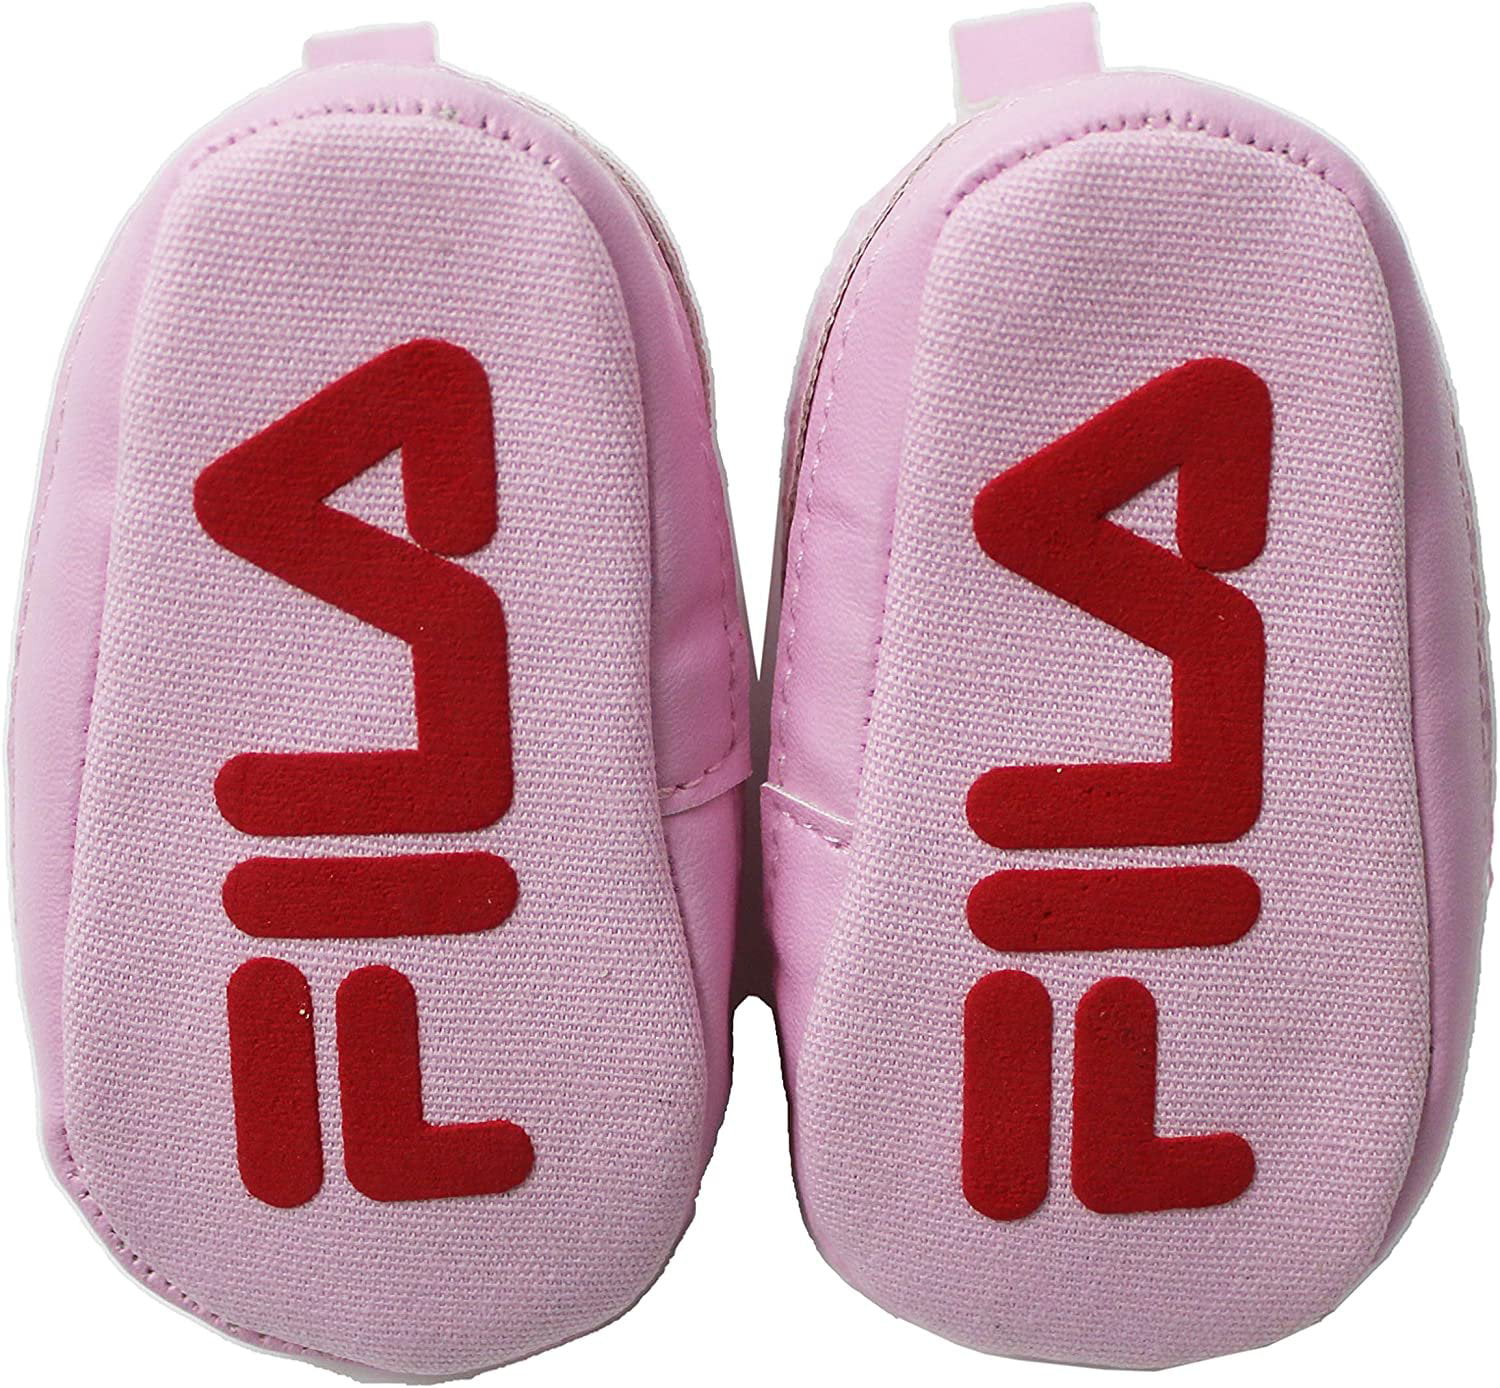 Fila Infant Sneaker Crib Shoe Printed Roses - Blush, 6-9 Months -  Walmart.com